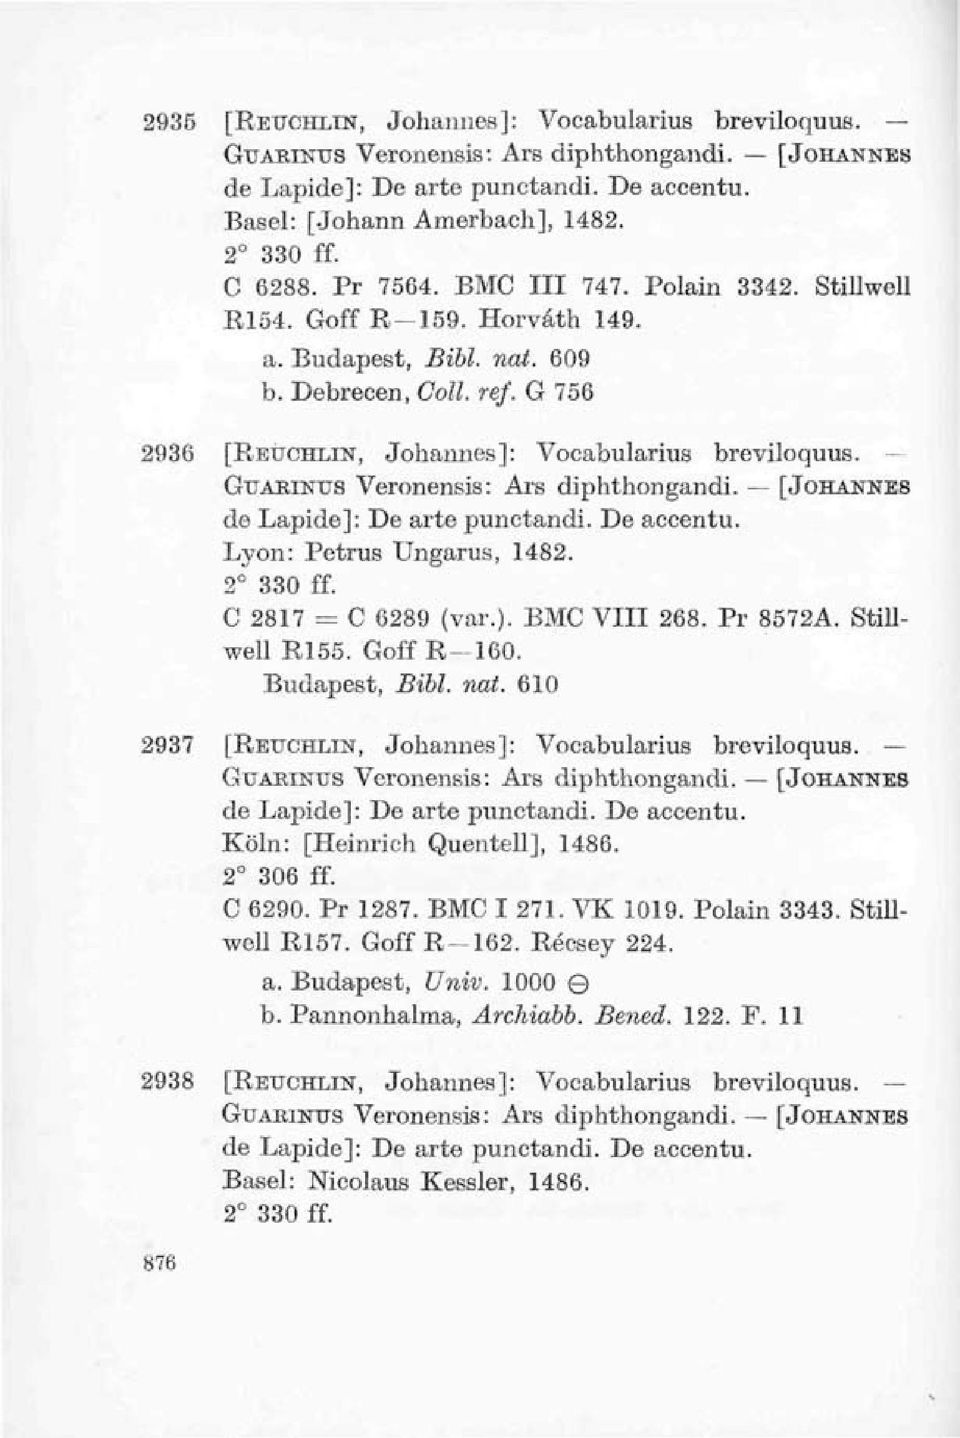 GUARINUS Veronensis: Ars diphthongandi. [JOHANNES de Lapide]: De arte punctandi. De accentu. Lyon: Petrus Ungarus, 1482. 2 330 ff. C 2817 = C 6289 (var.). BMC VIII 268. Pr 8572A. Stillwell R155.